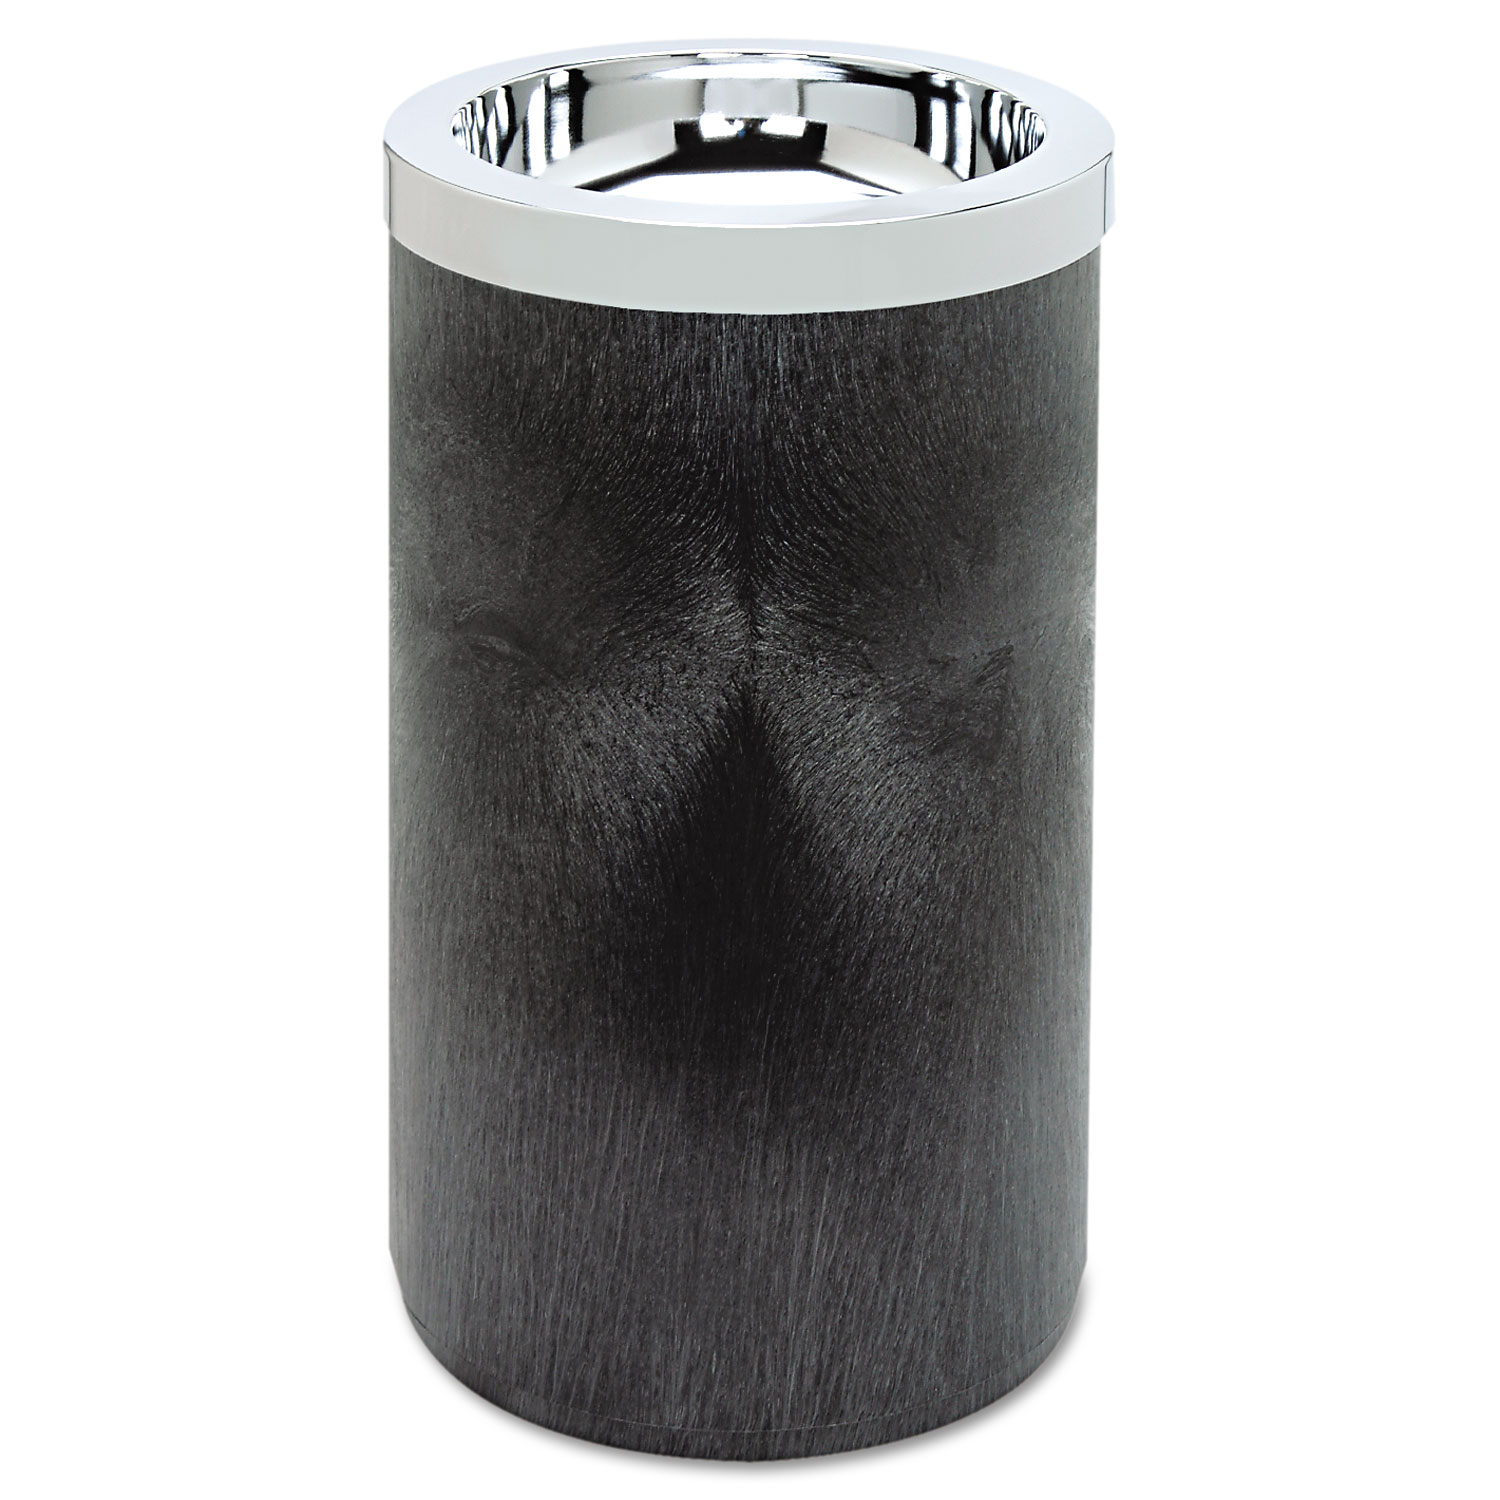  Rubbermaid Commercial FG258500BLA Smoking Urn with Metal Ashtray Top, 19.5h x 11.5 dia, Black (RCP258500BLA) 